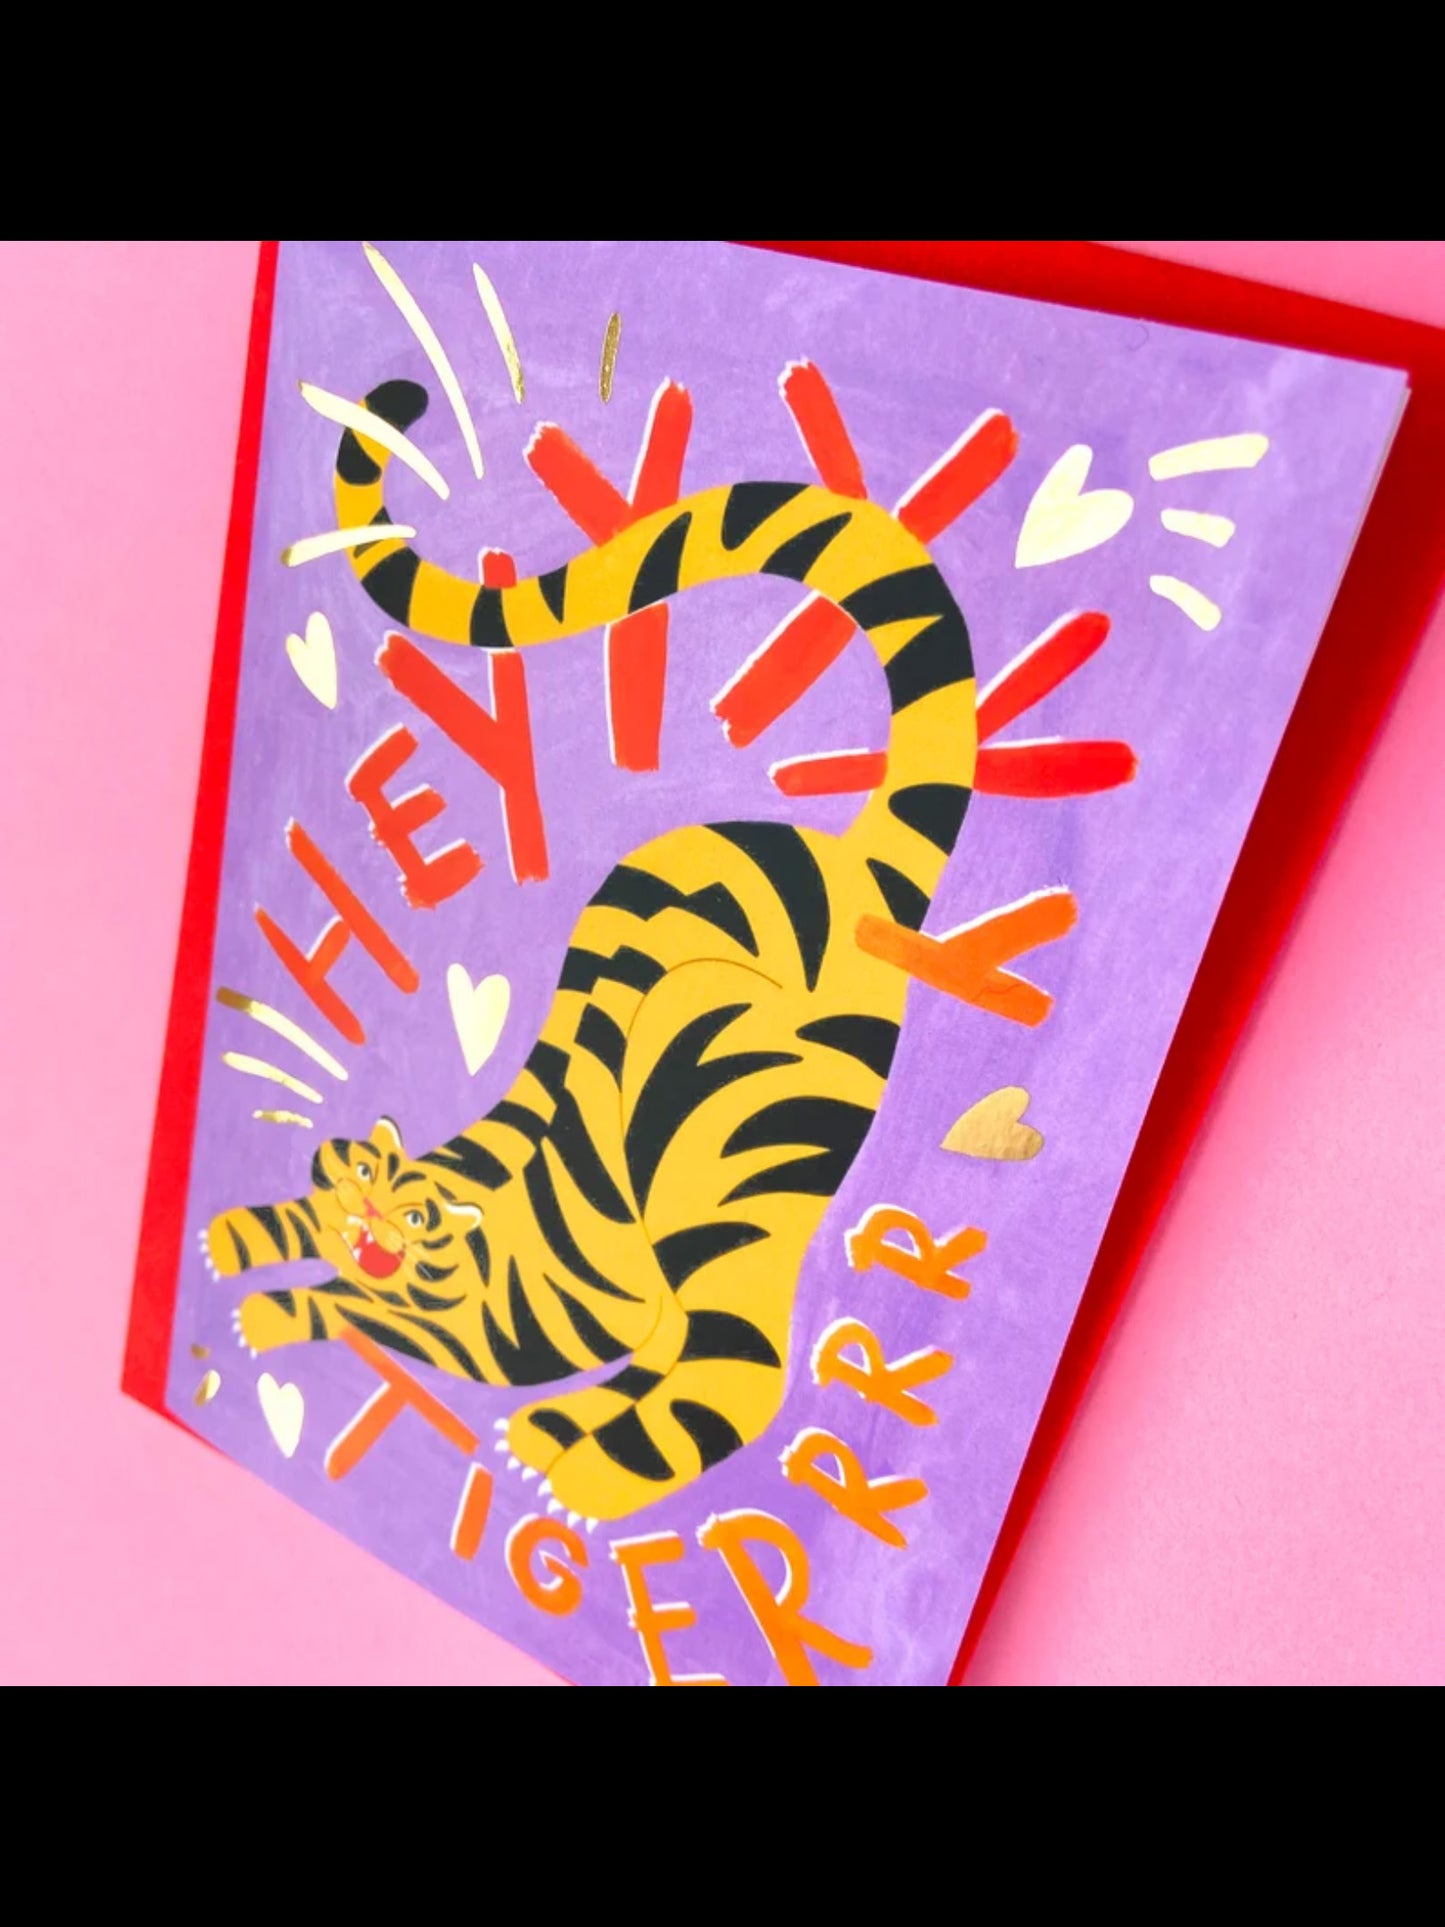 Greetings Card - ‘Heyyyyy Tiger’ by Ickaprint